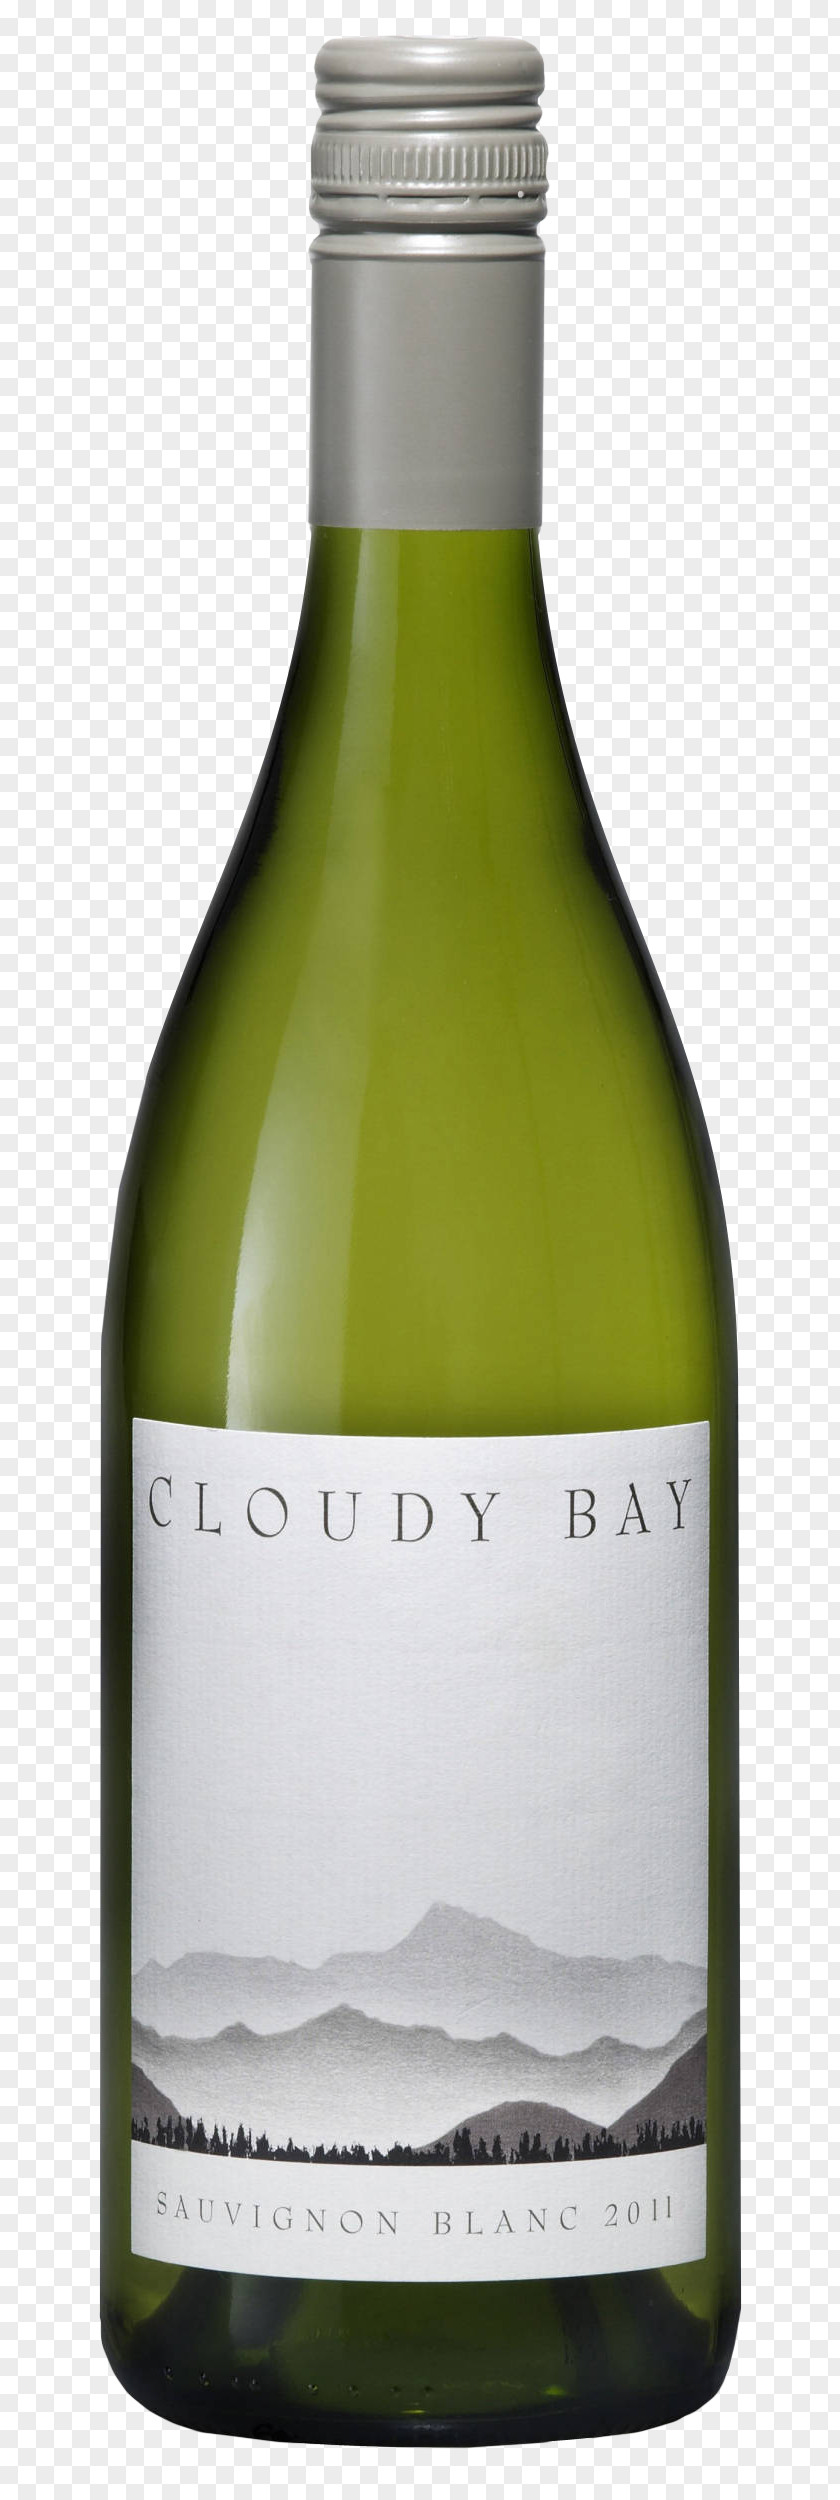 Pure Leaf Lemon Tea Bottle Marlborough Cloudy Bay Vineyards White Wine Common Grape Vine PNG